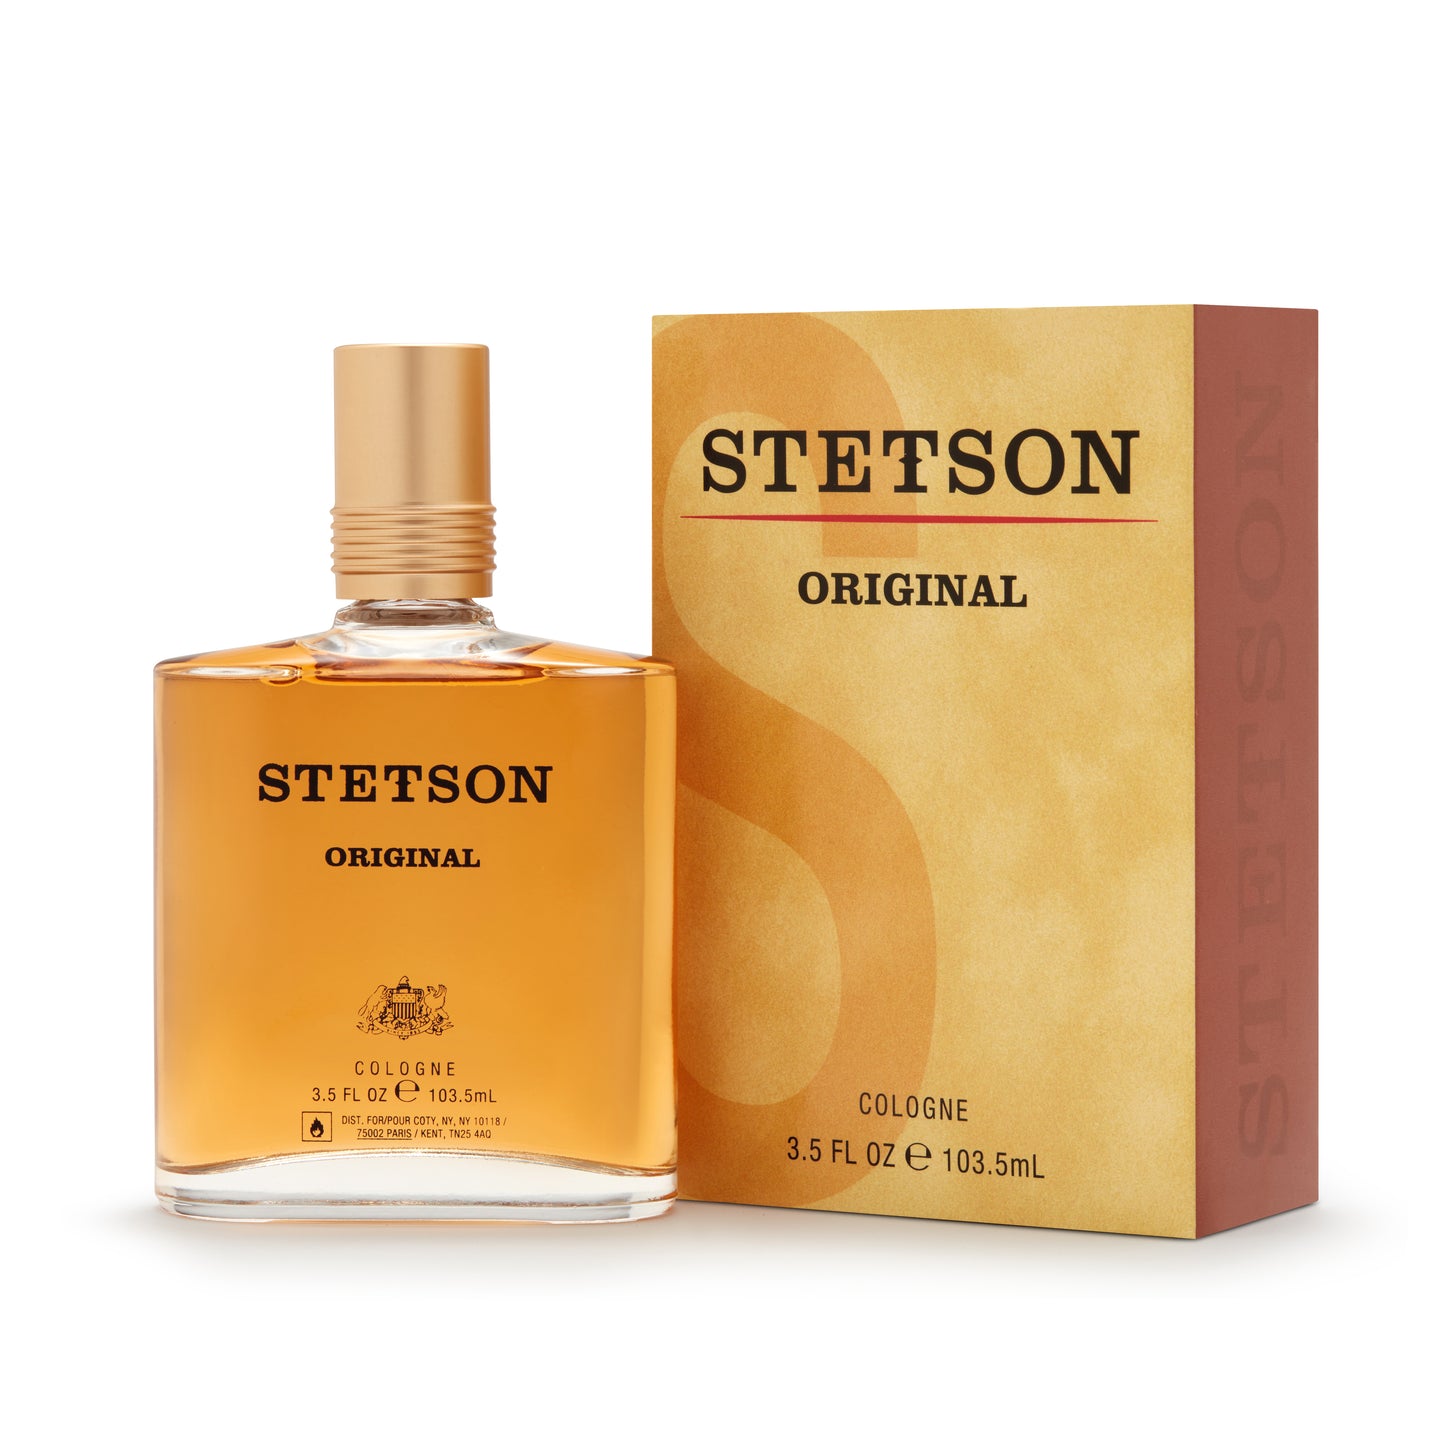 Stetson Original Cologne 3.5 fl oz